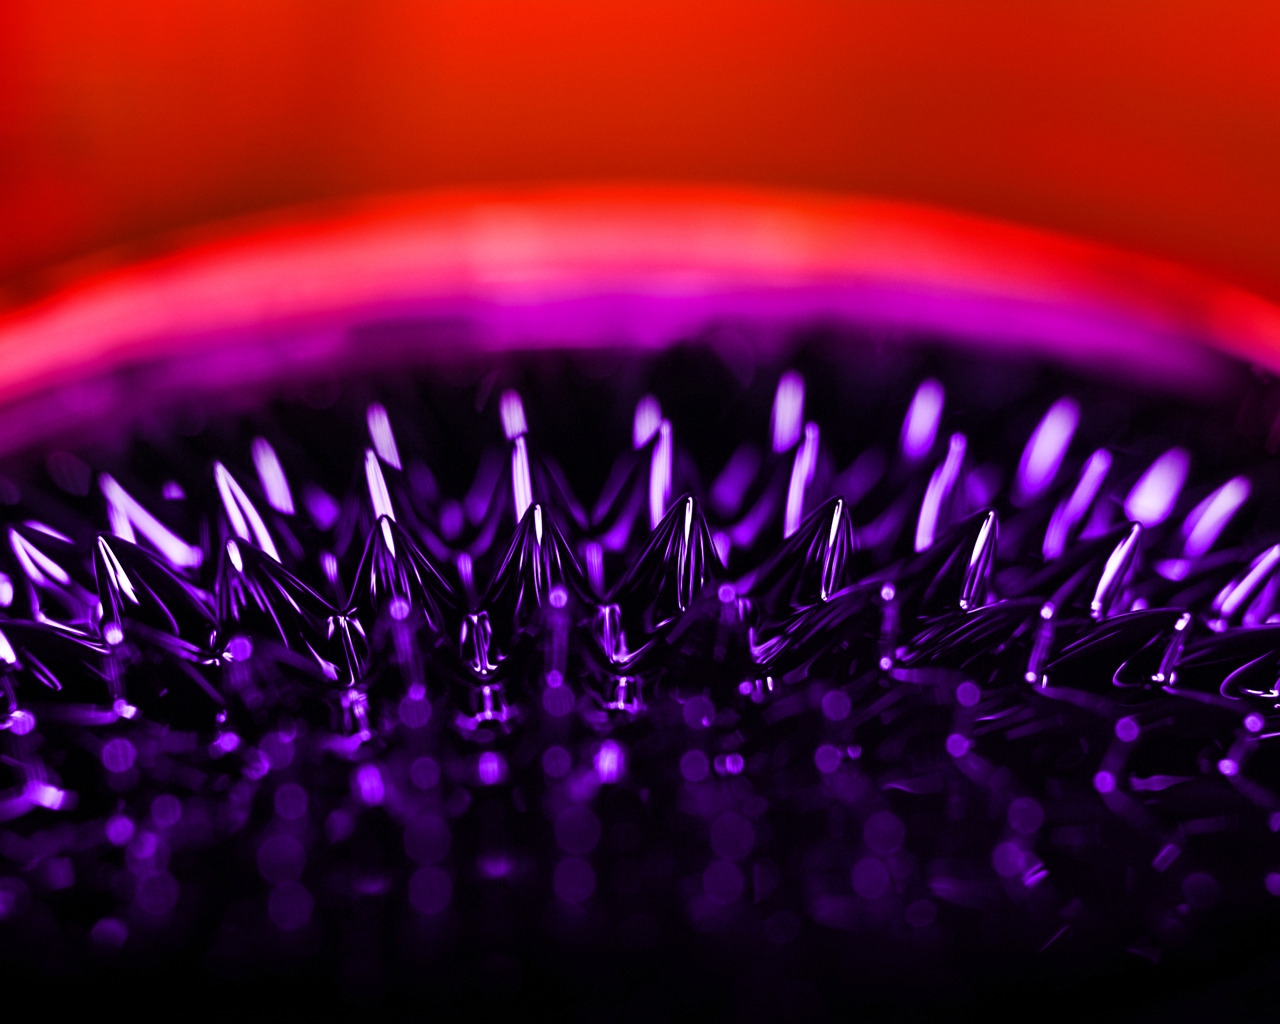 Ferrofluid for 1280 x 1024 resolution